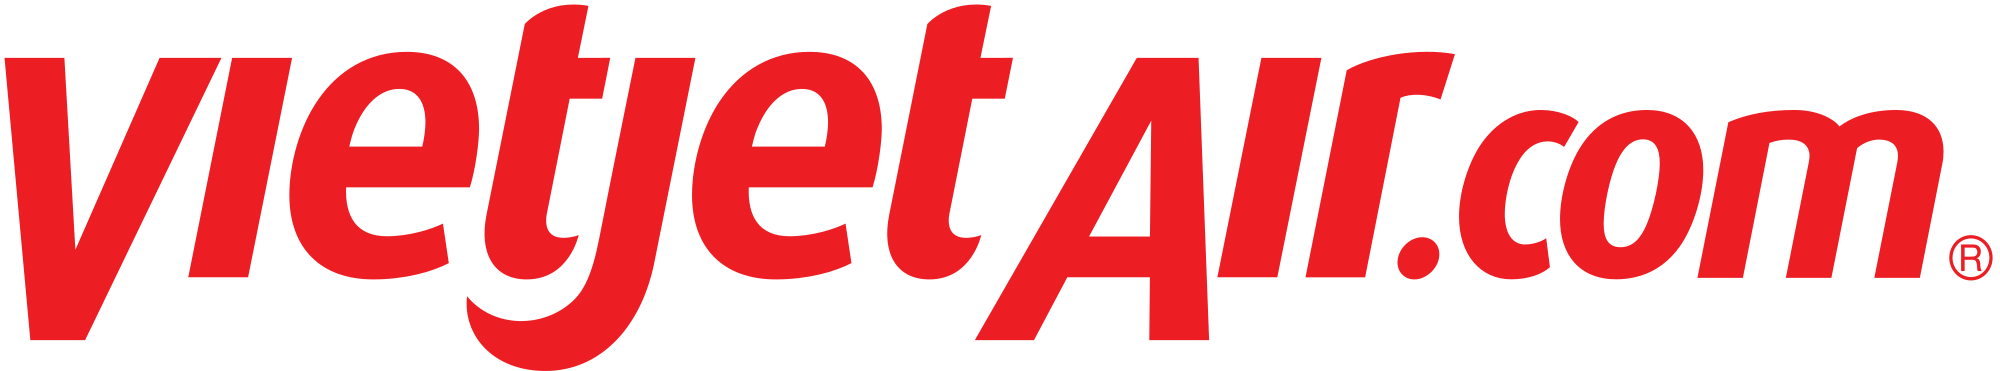 Vietjet Air logo, red